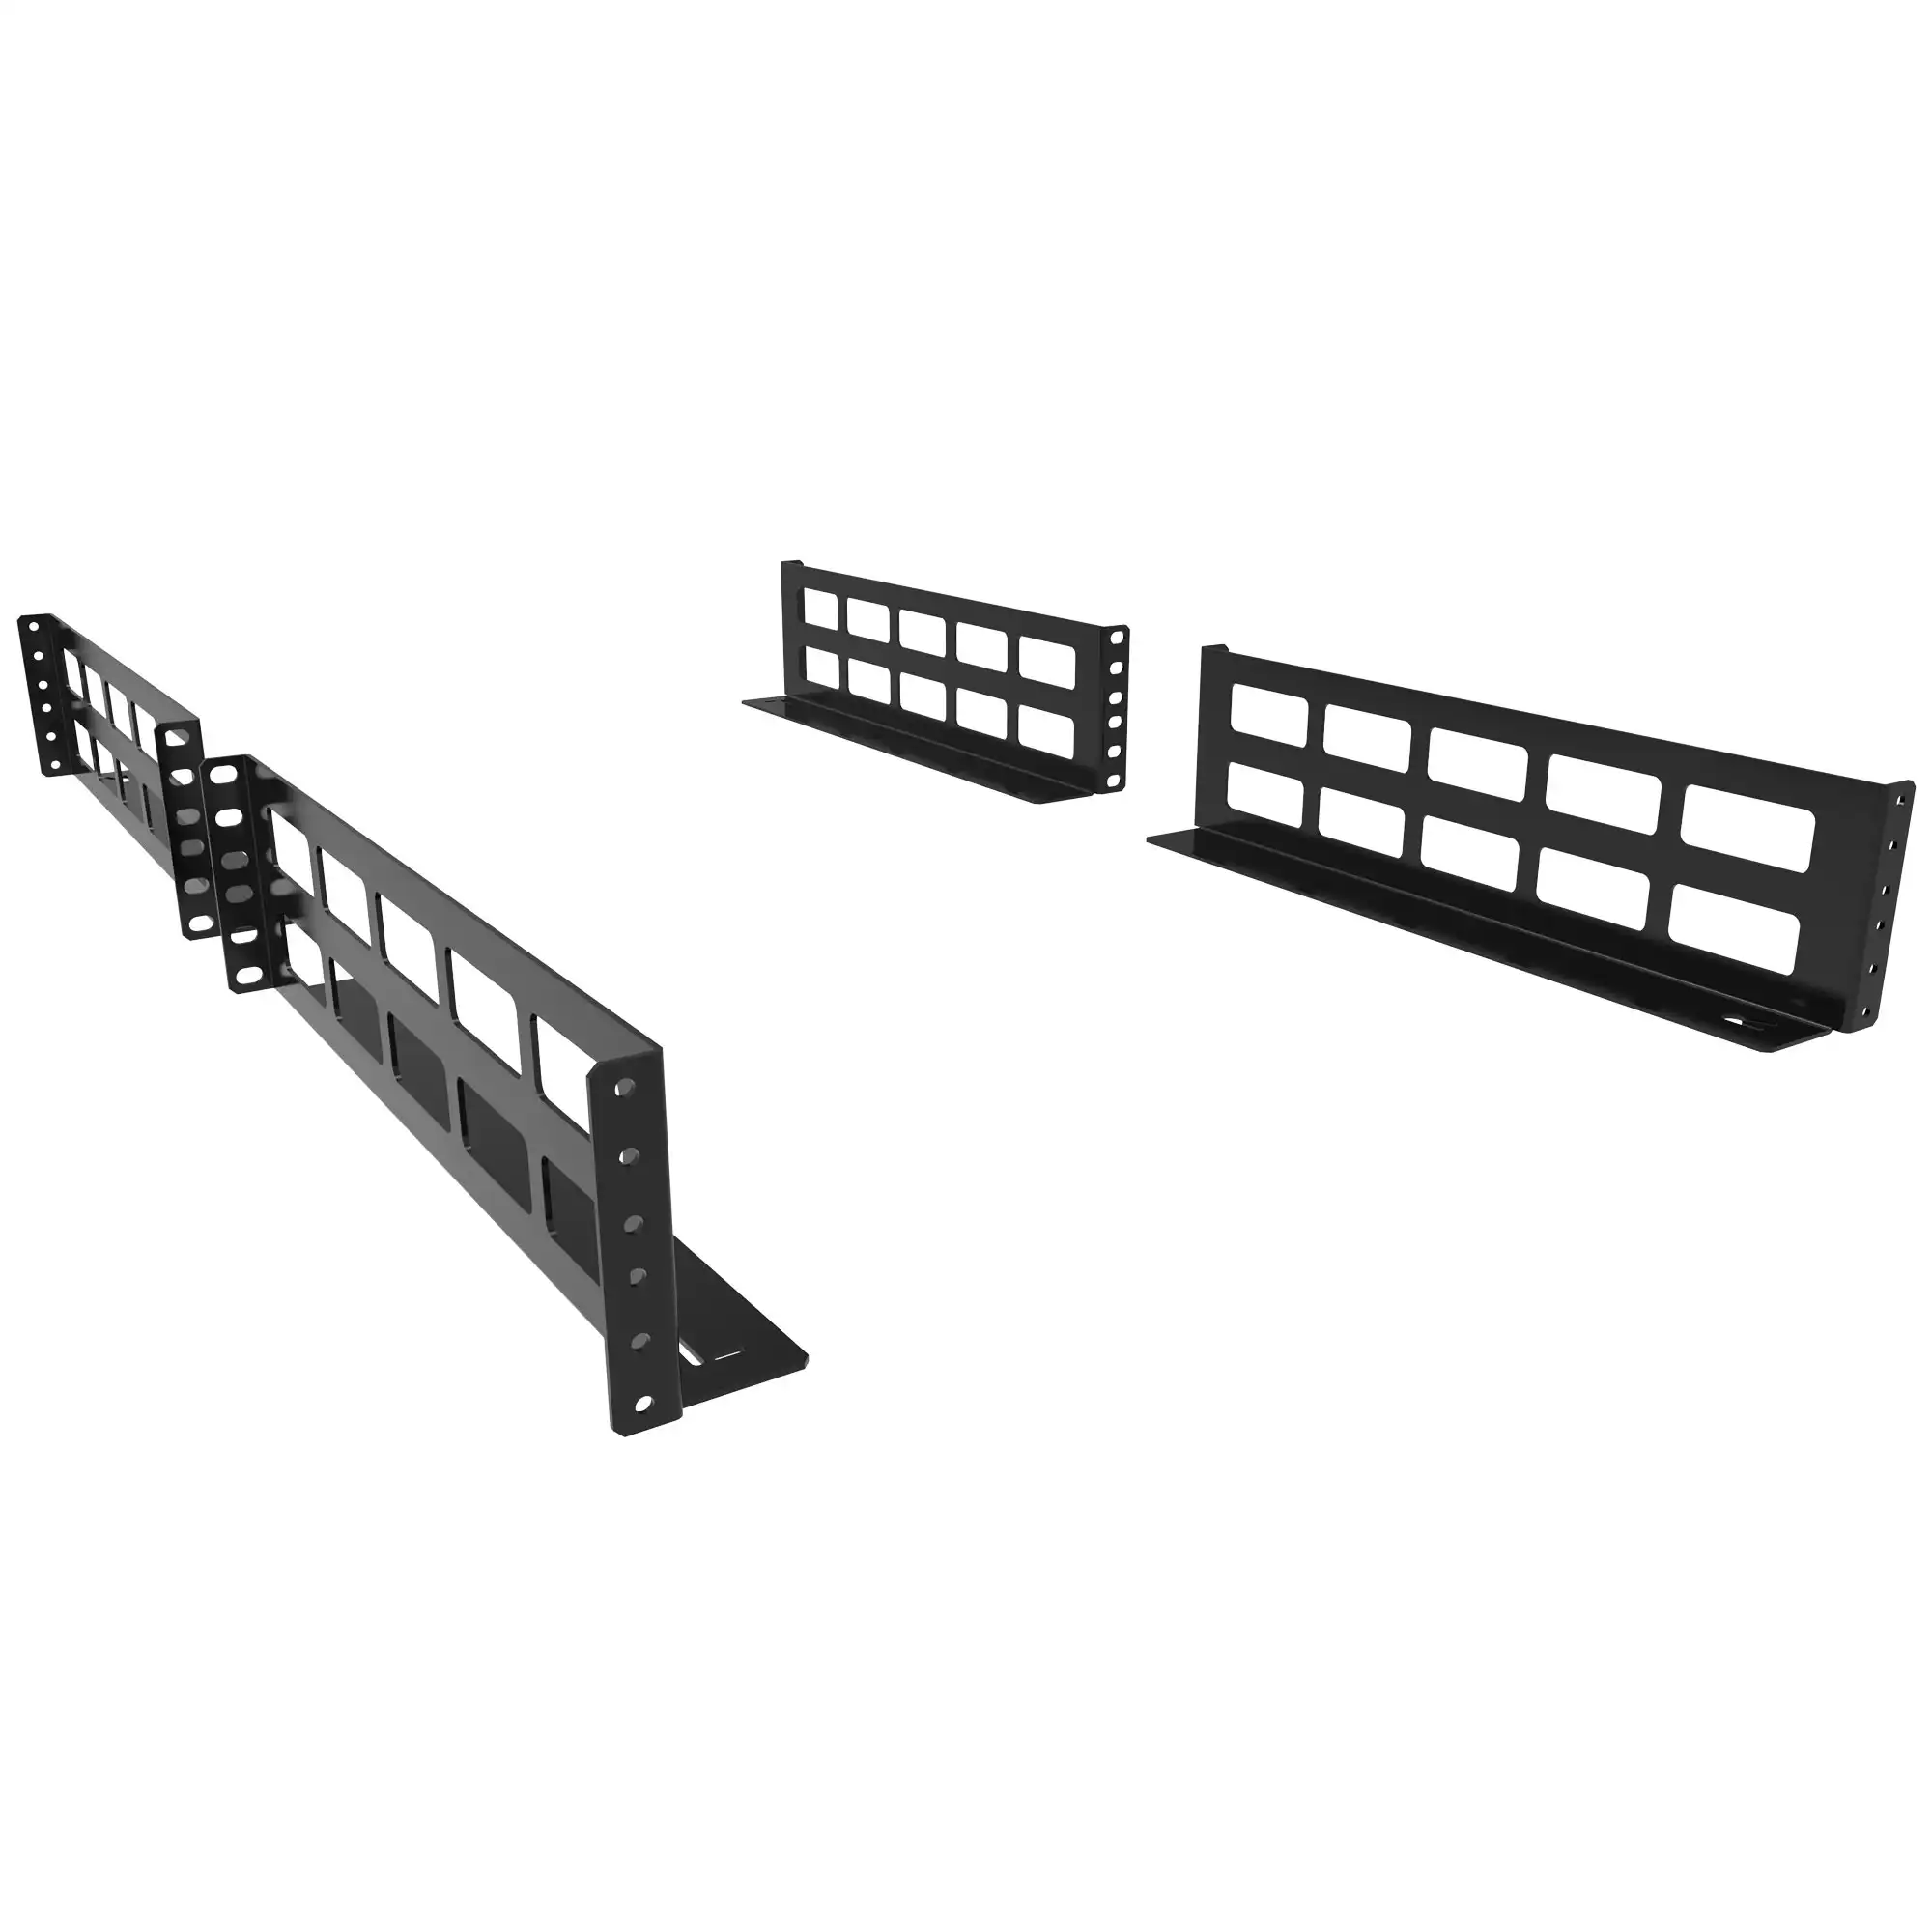 RDAB Series - Hammond Manufacturing Rack Solutions at KGA Enclosures Ltd - Click for a larger image